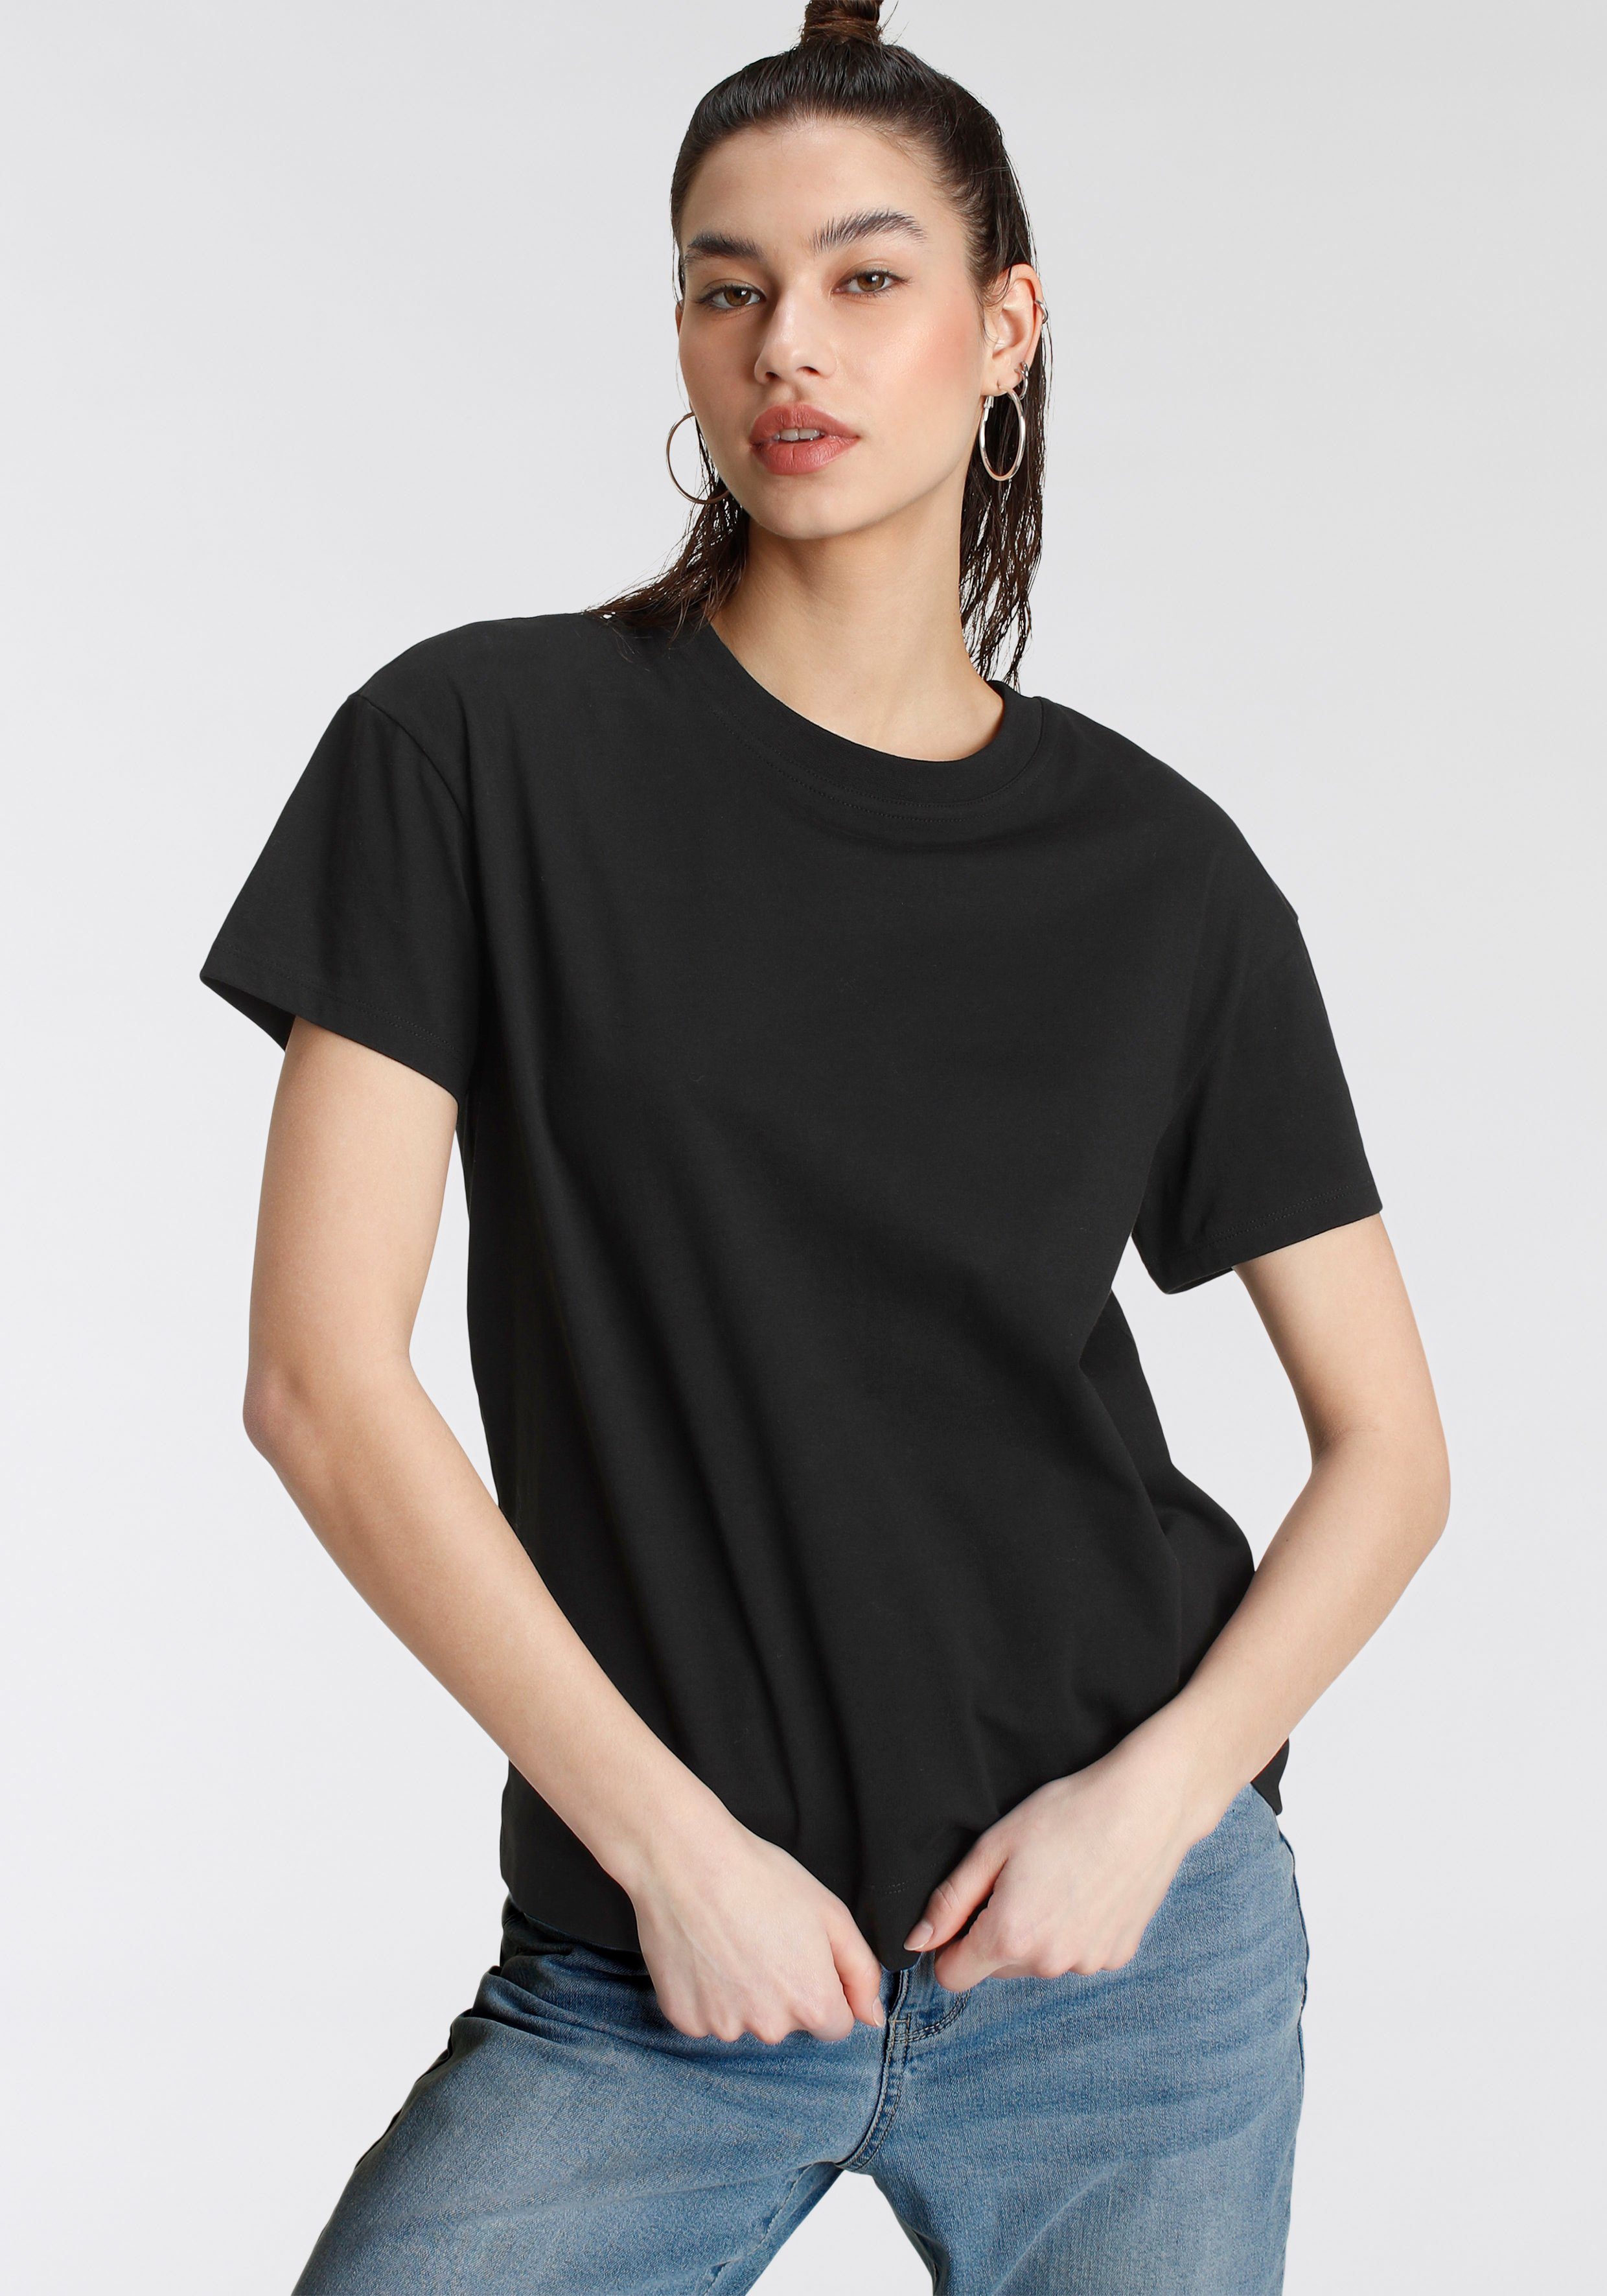 Tamaris T-Shirt im Oversized-Look schwarz